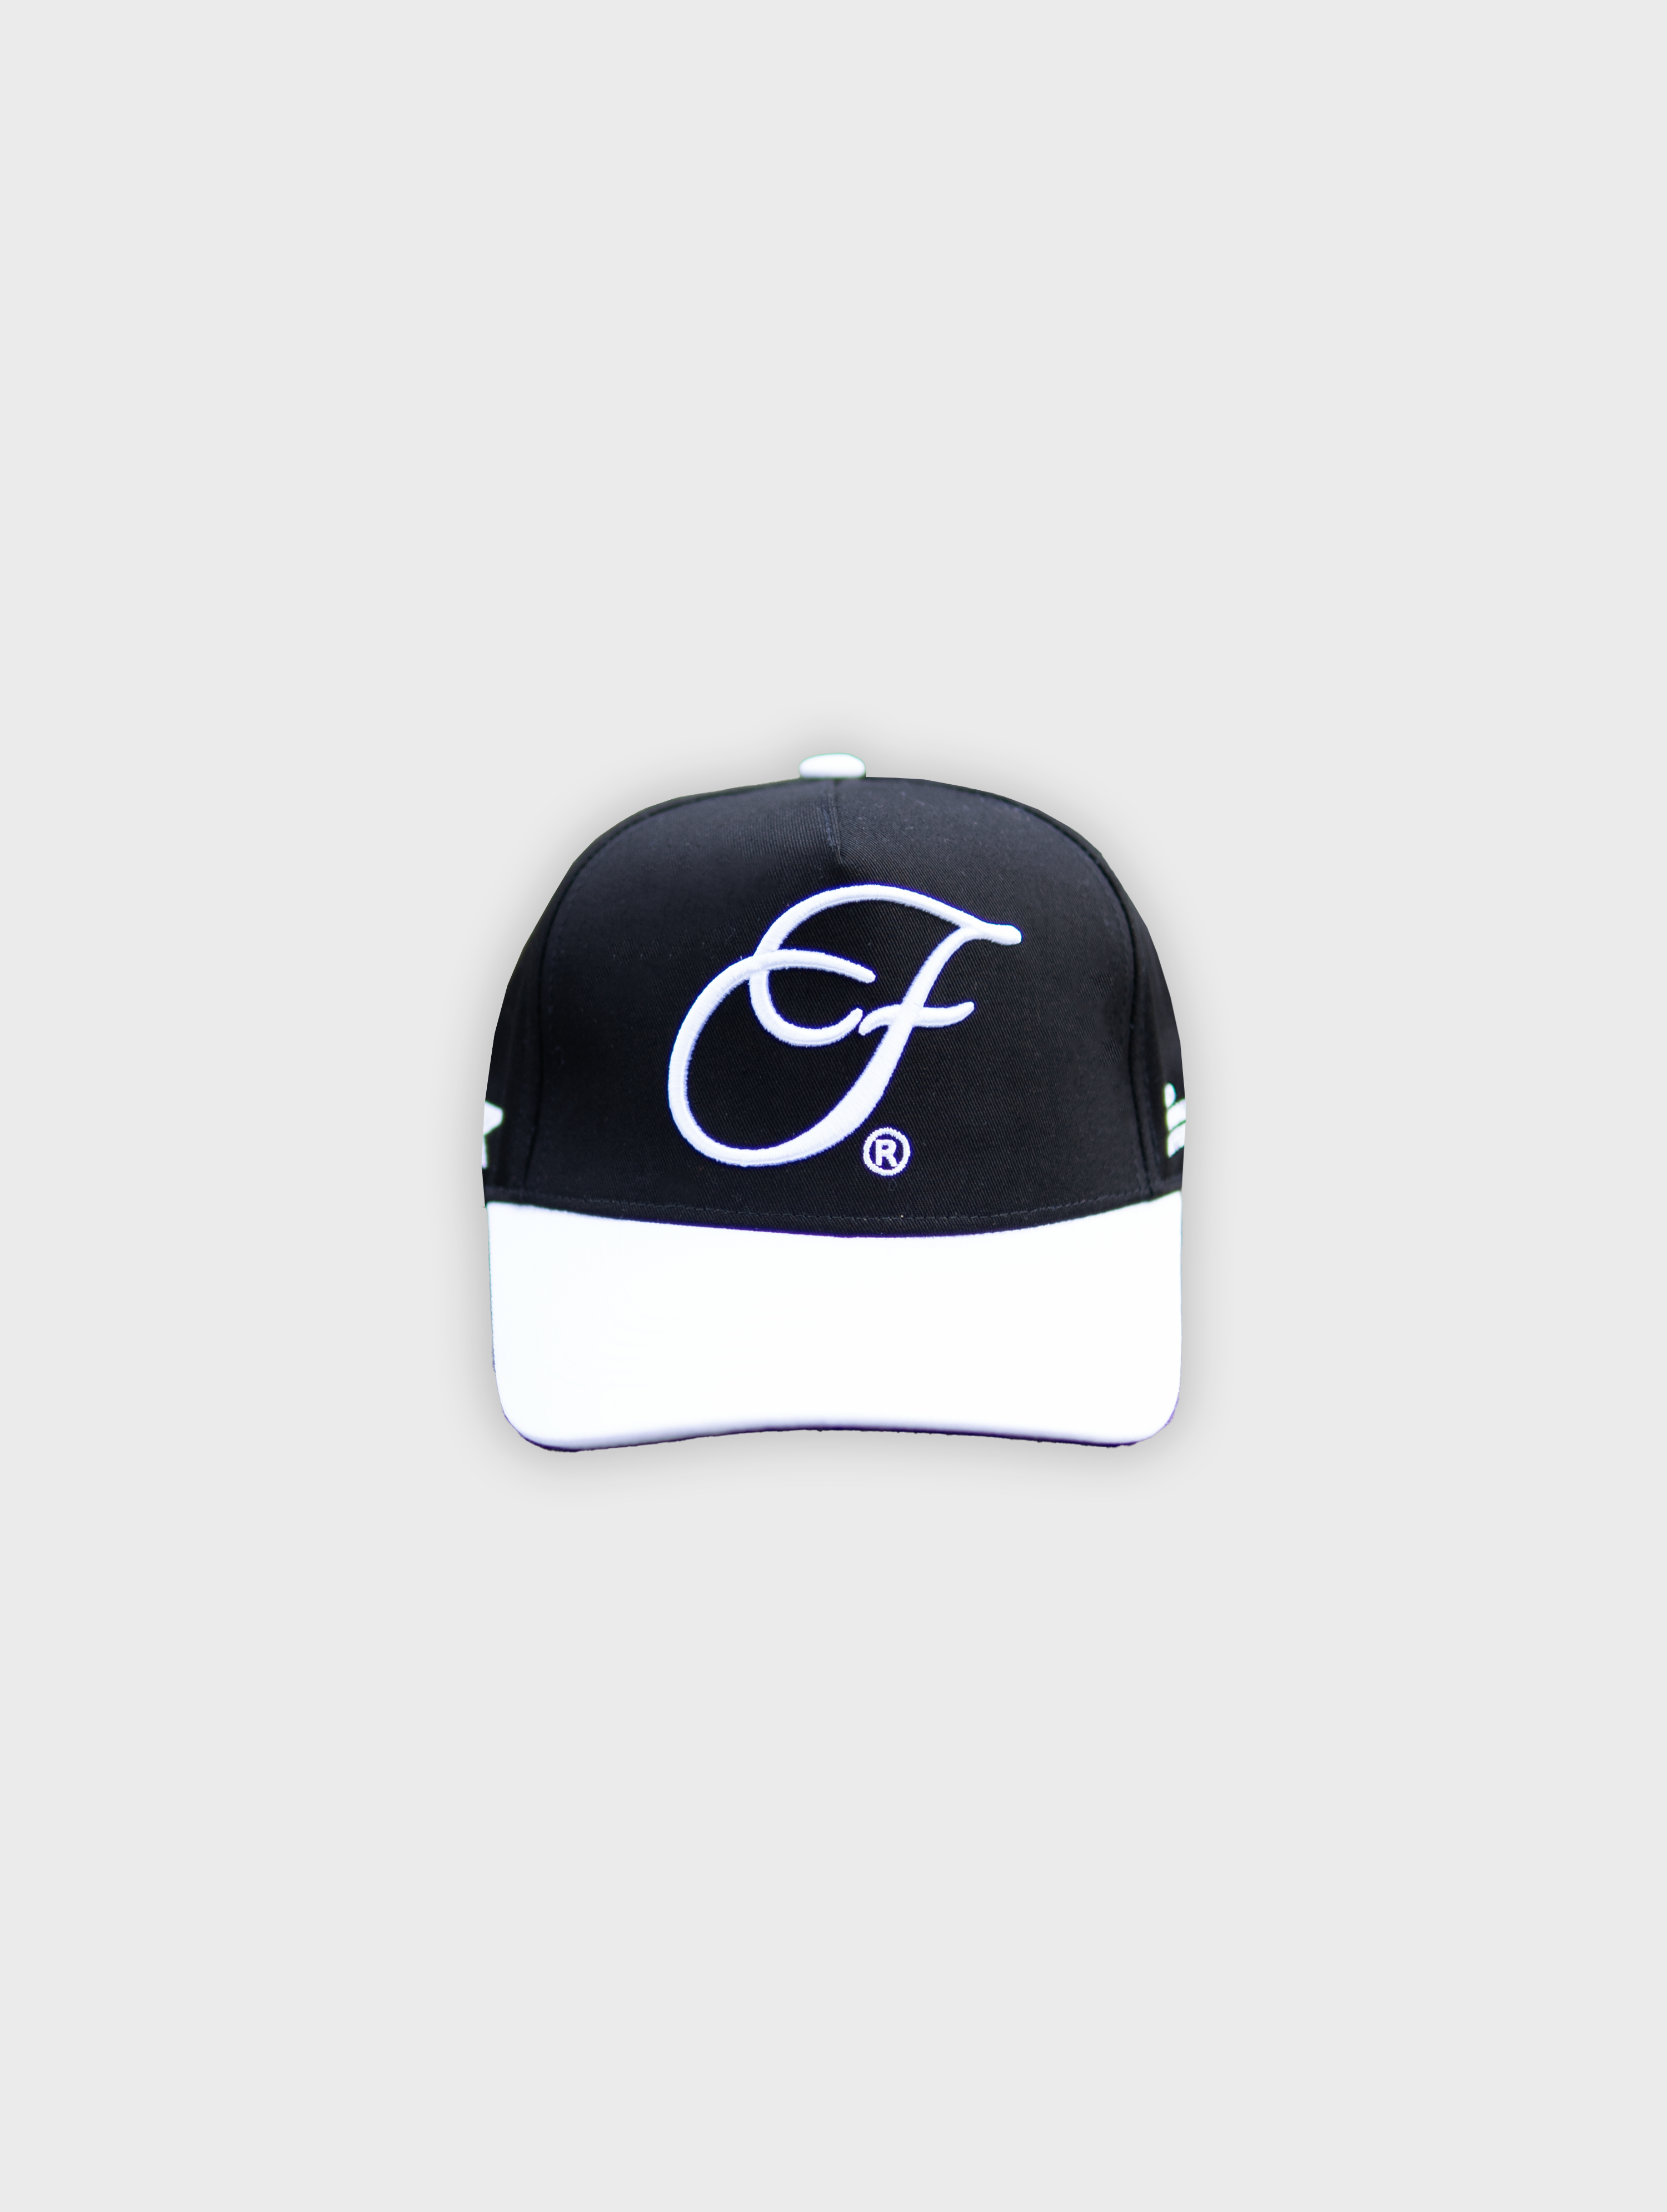 Initial Baseball Cap - Black/White